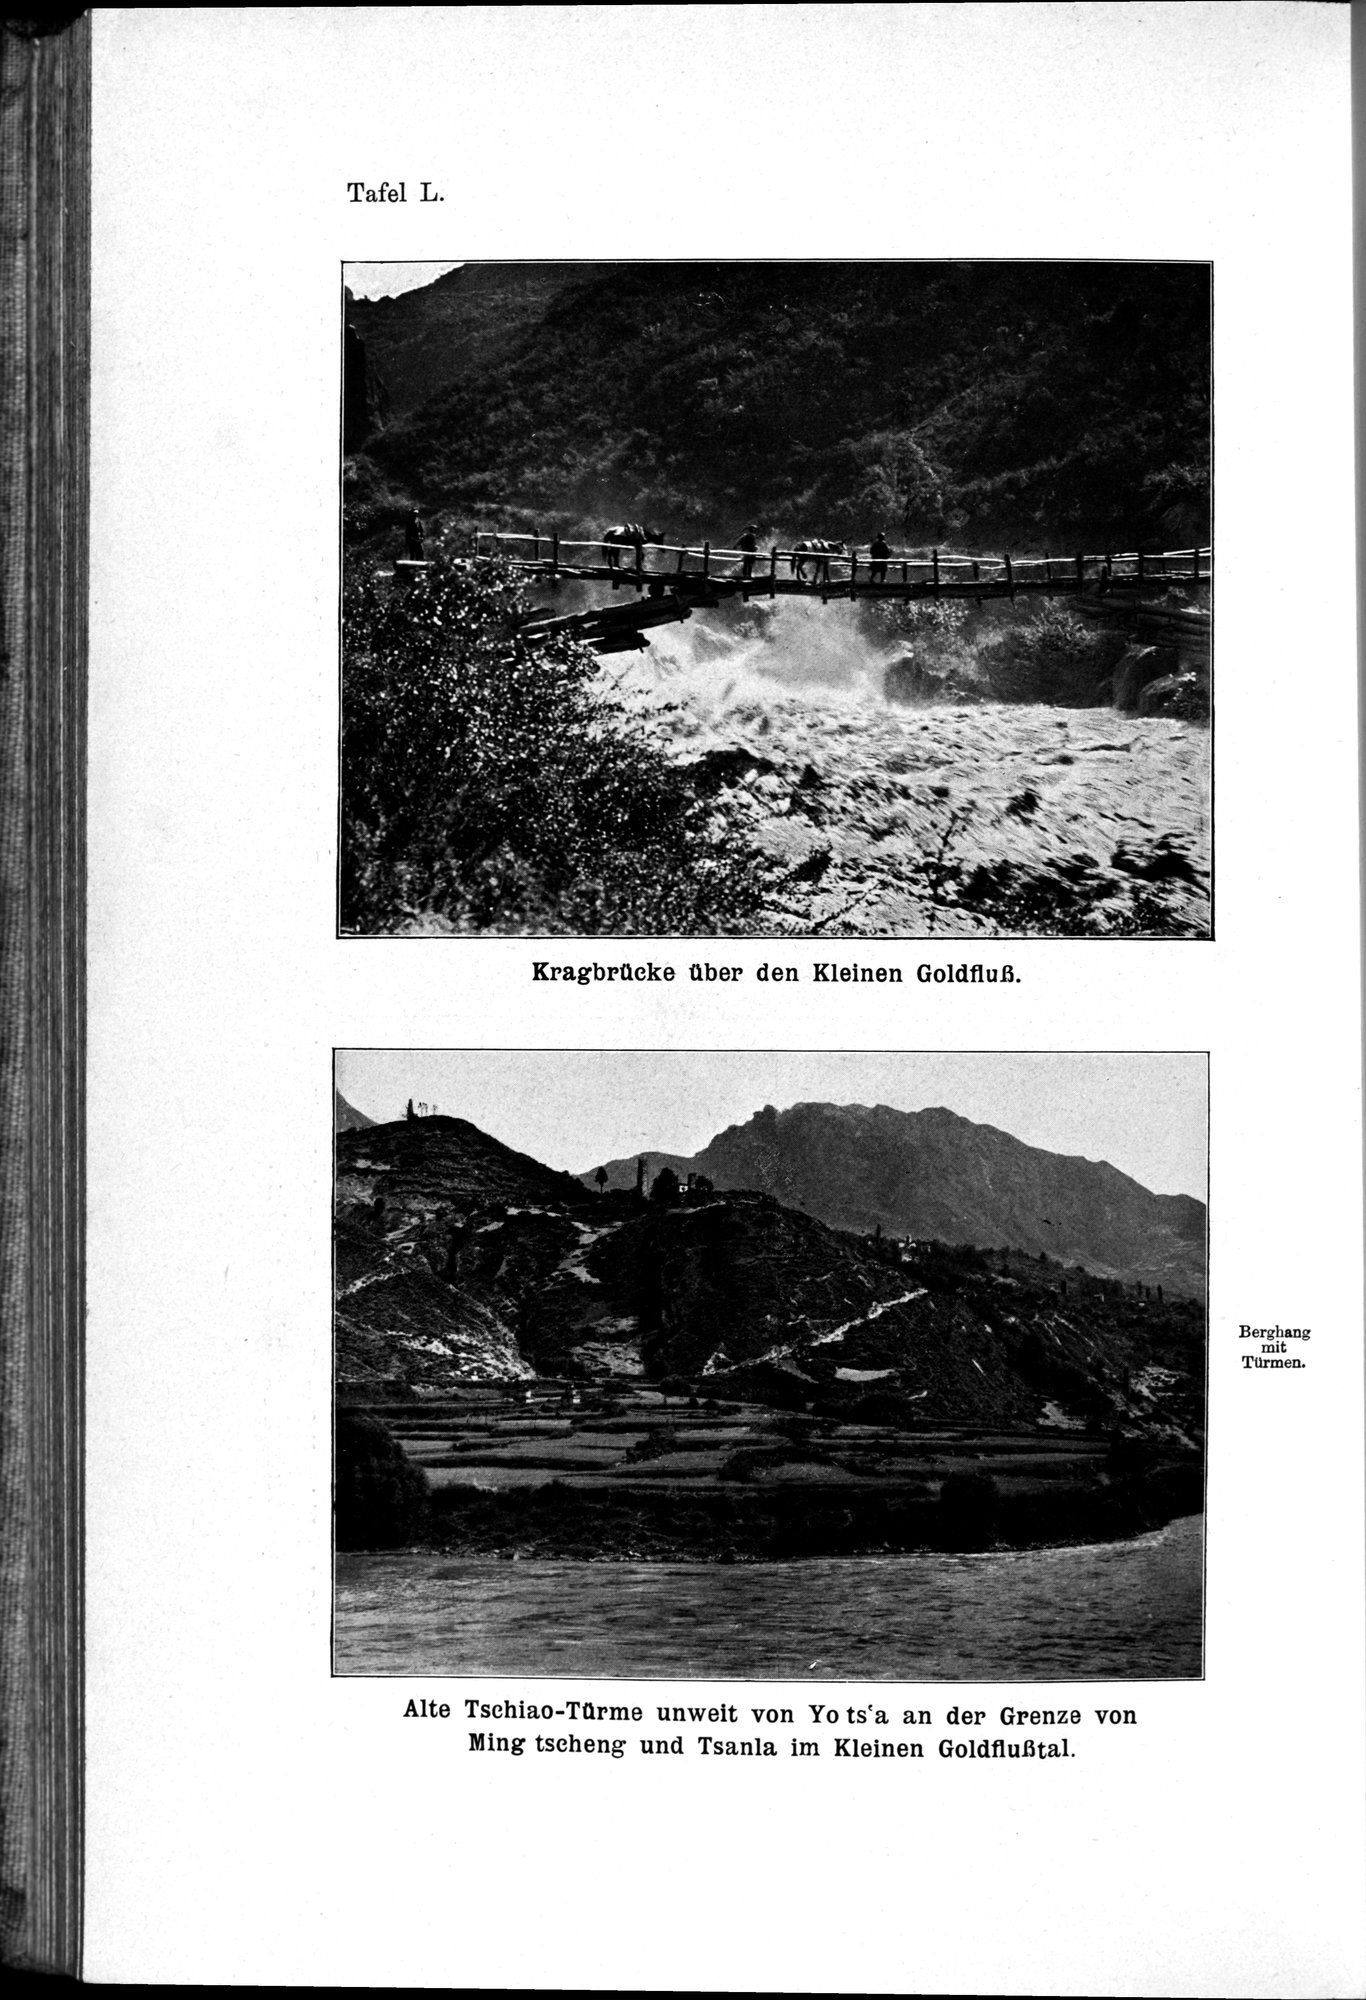 Meine Tibetreise : vol.2 / Page 276 (Grayscale High Resolution Image)